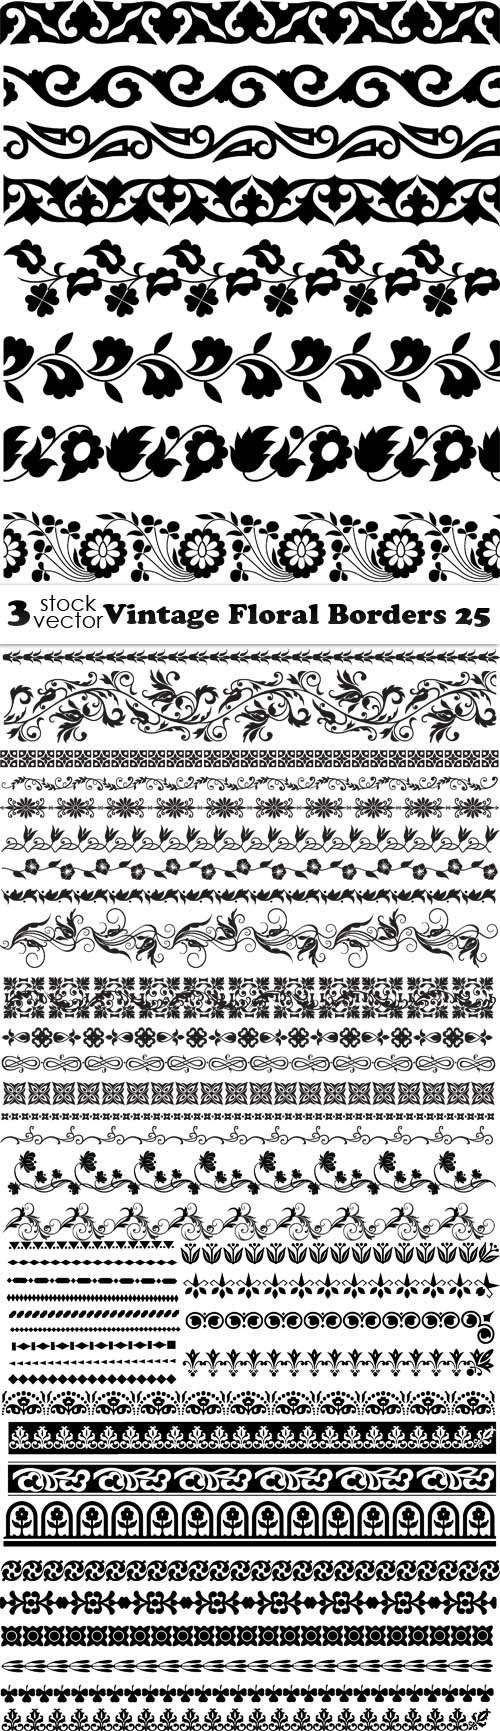 Vectors - Vintage Floral Borders 25